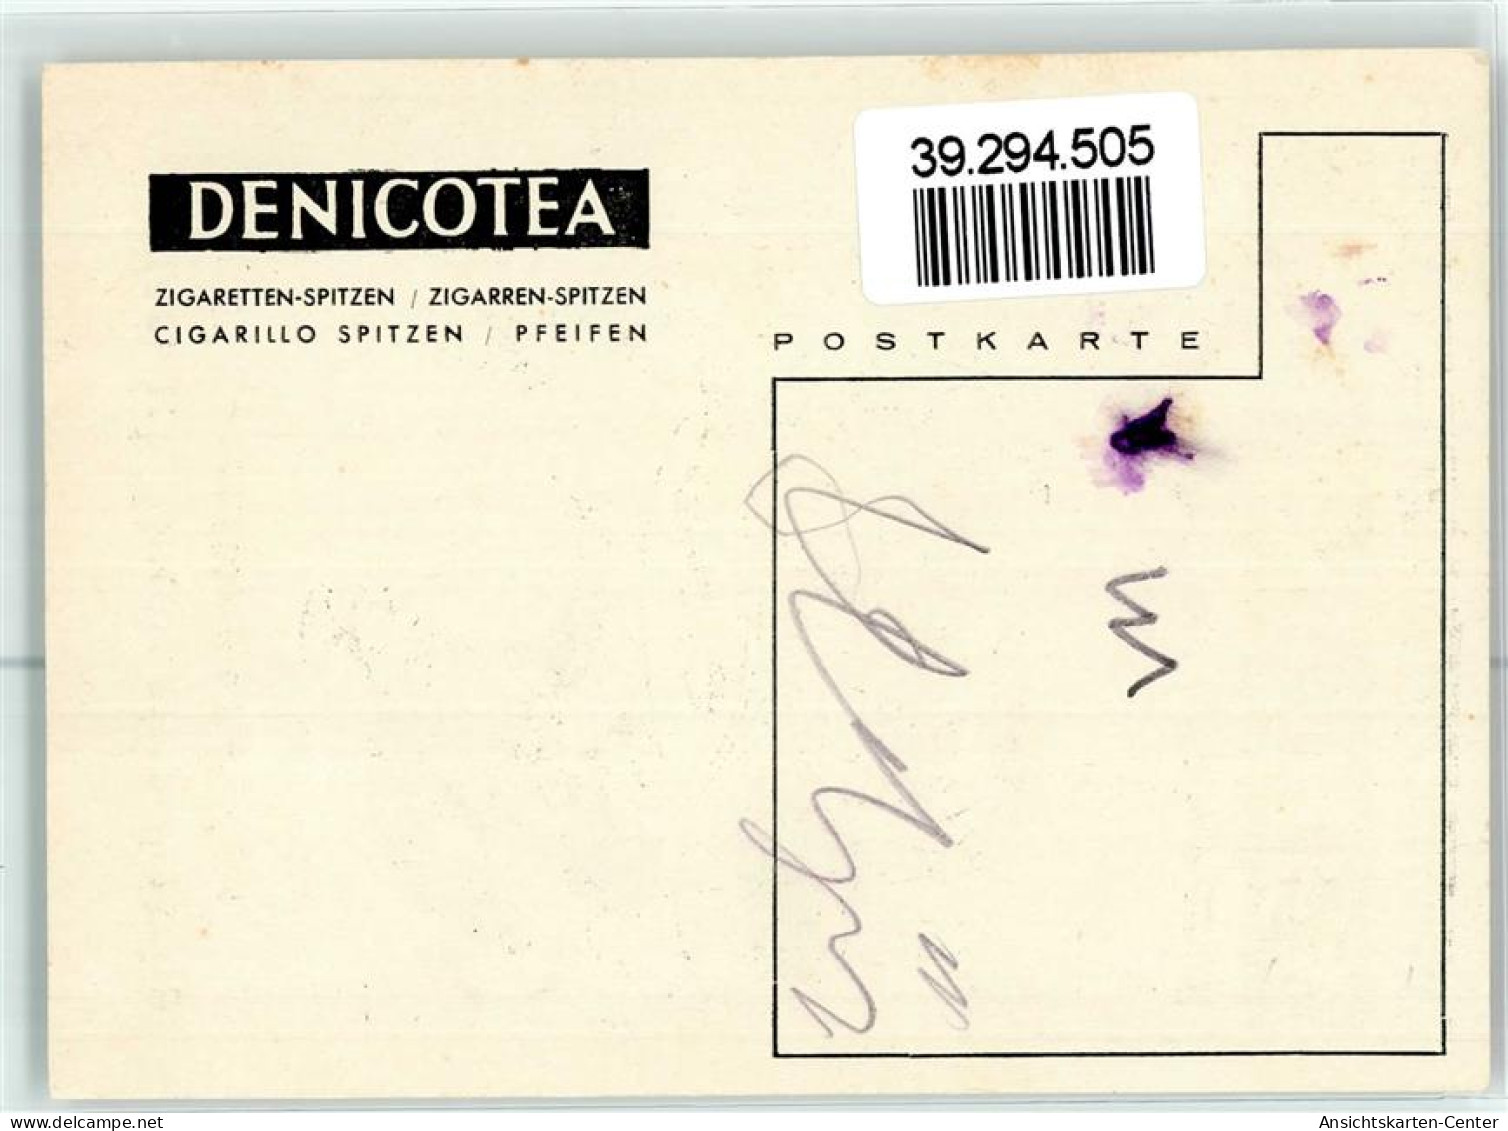 39294505 - Denicotea Zigarettenspitze - Advertising